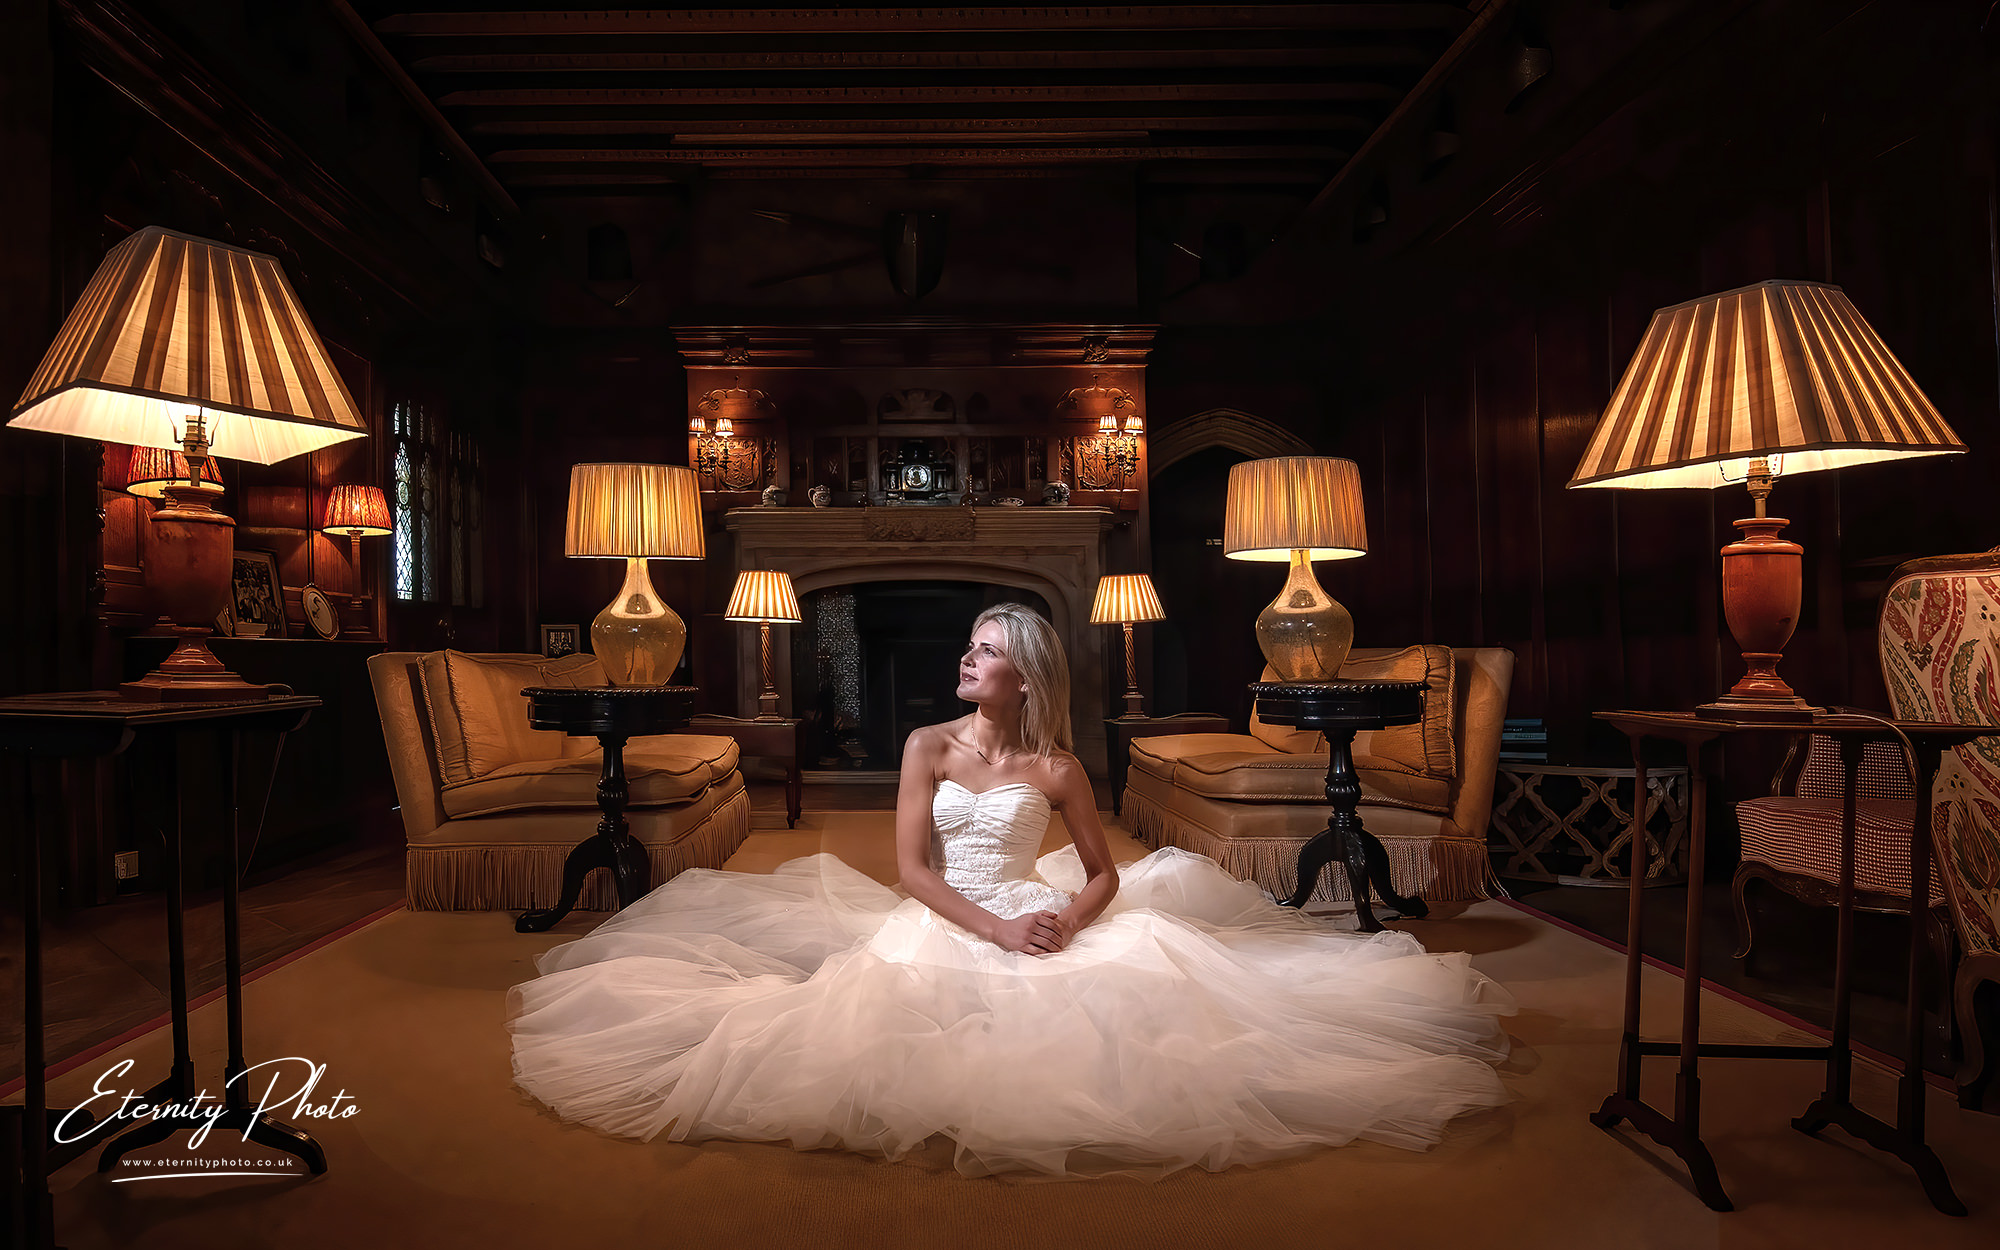 Bride in elegant gown inside vintage room with lamps